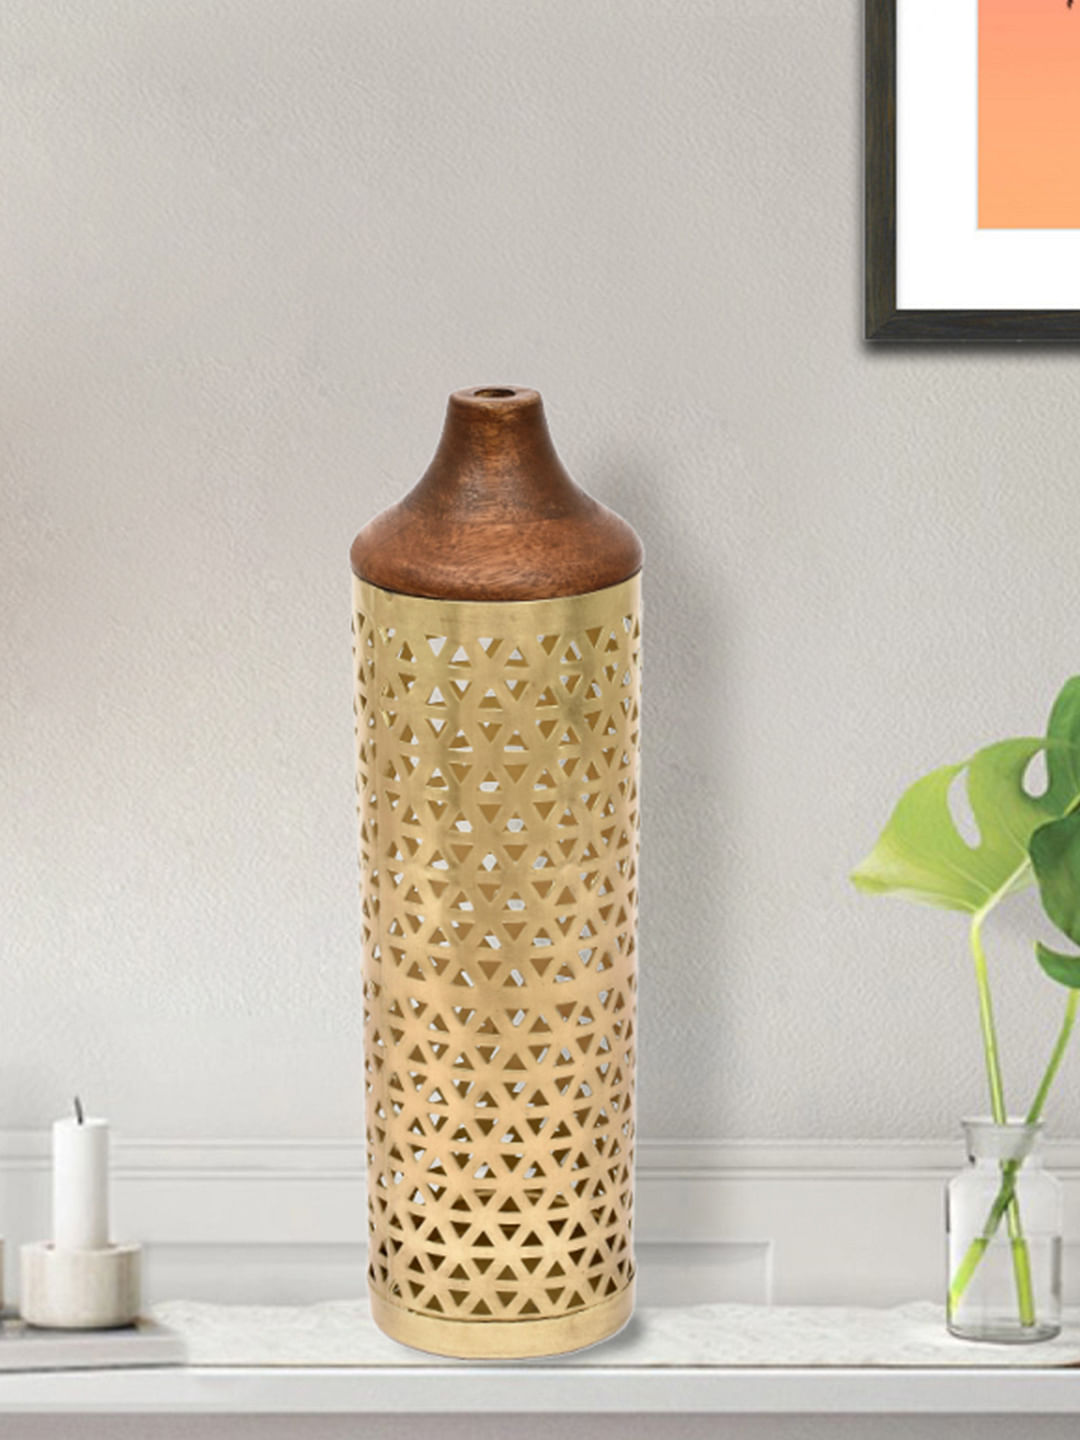 Tjori Iron Vase in Brown And Gold Colour